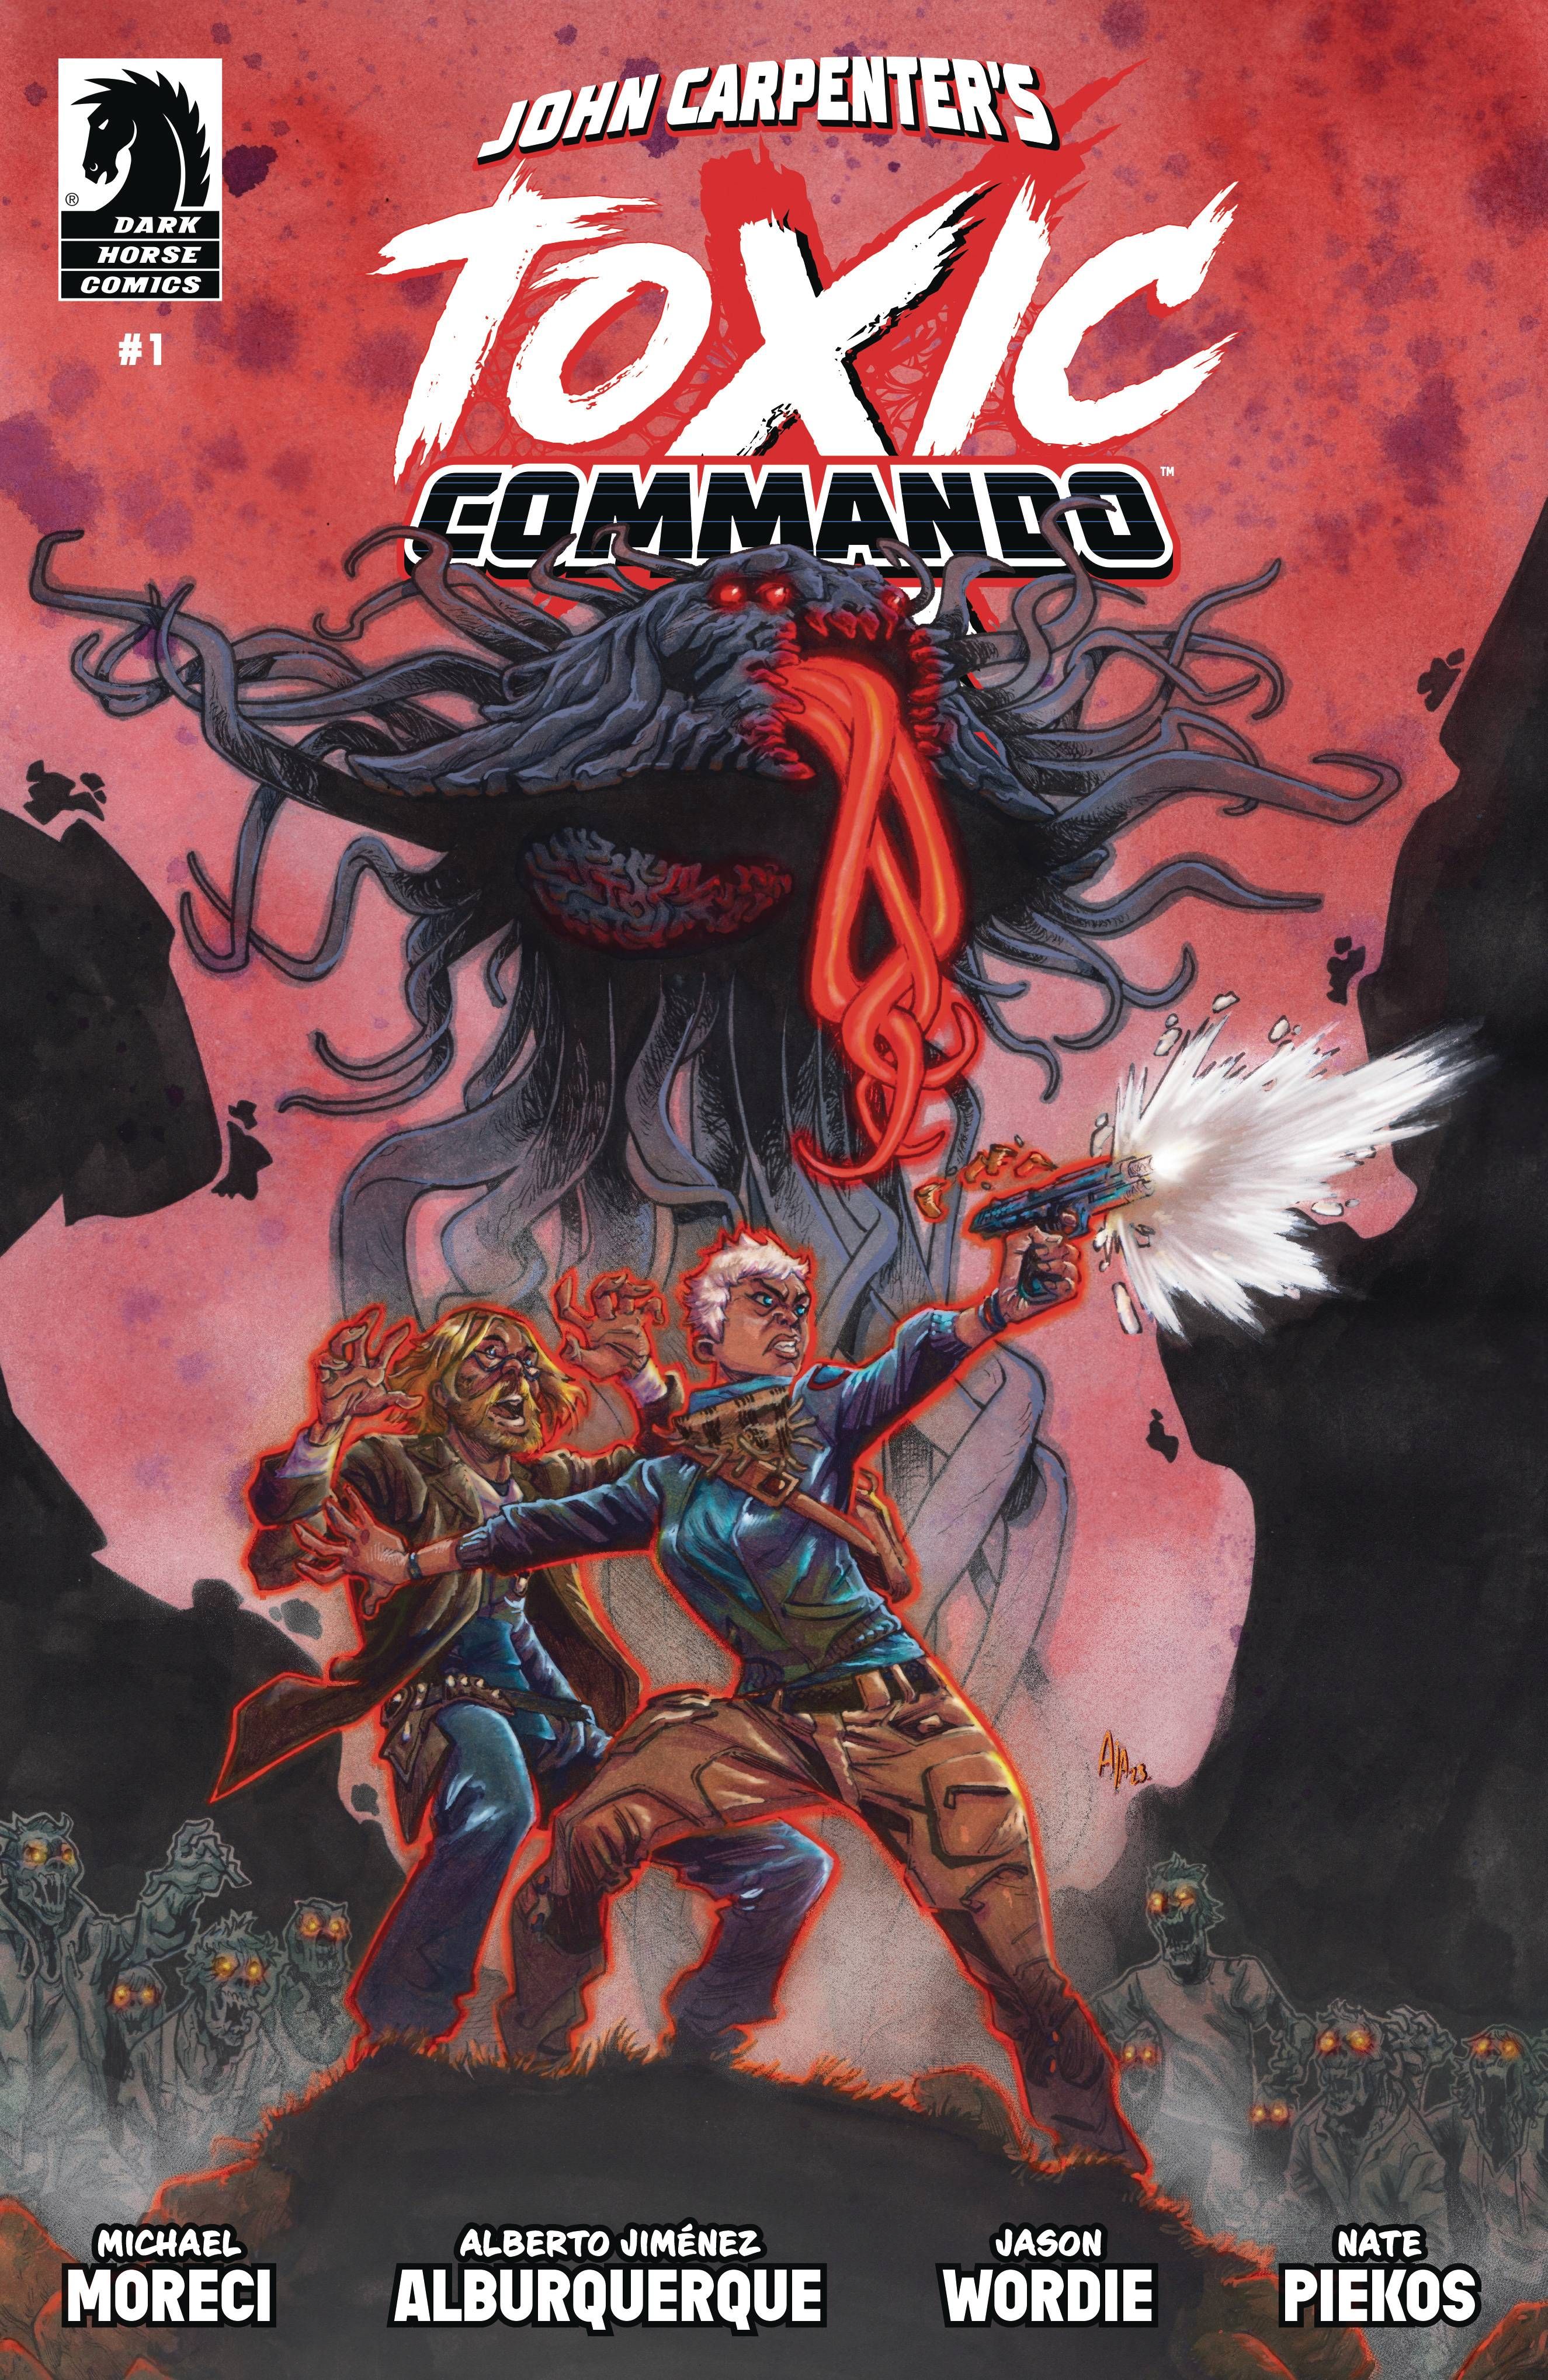 John Carpenter's Toxic Commando Comic